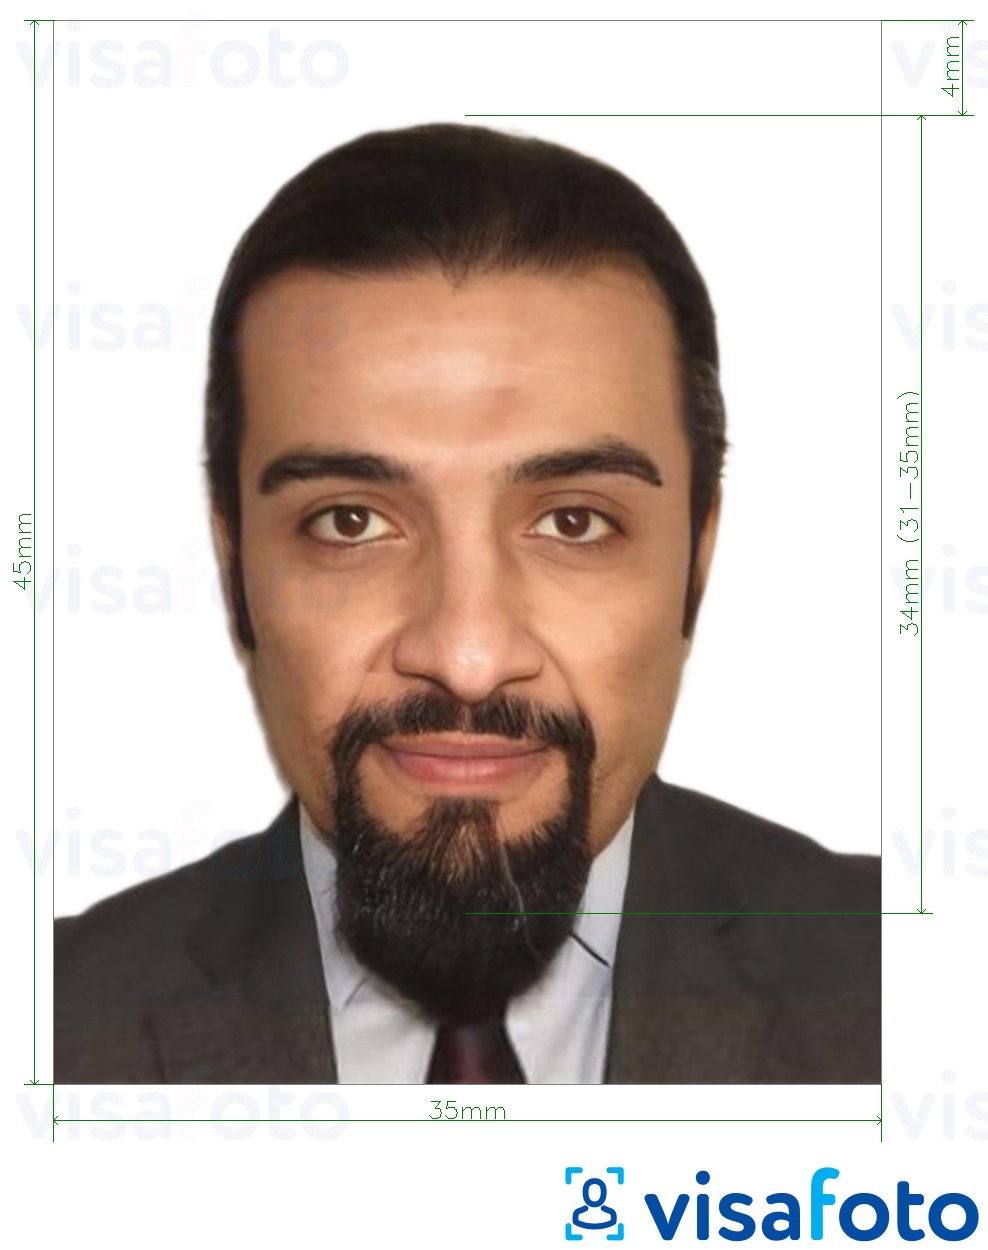 Emirates visa photo size for application through ICP